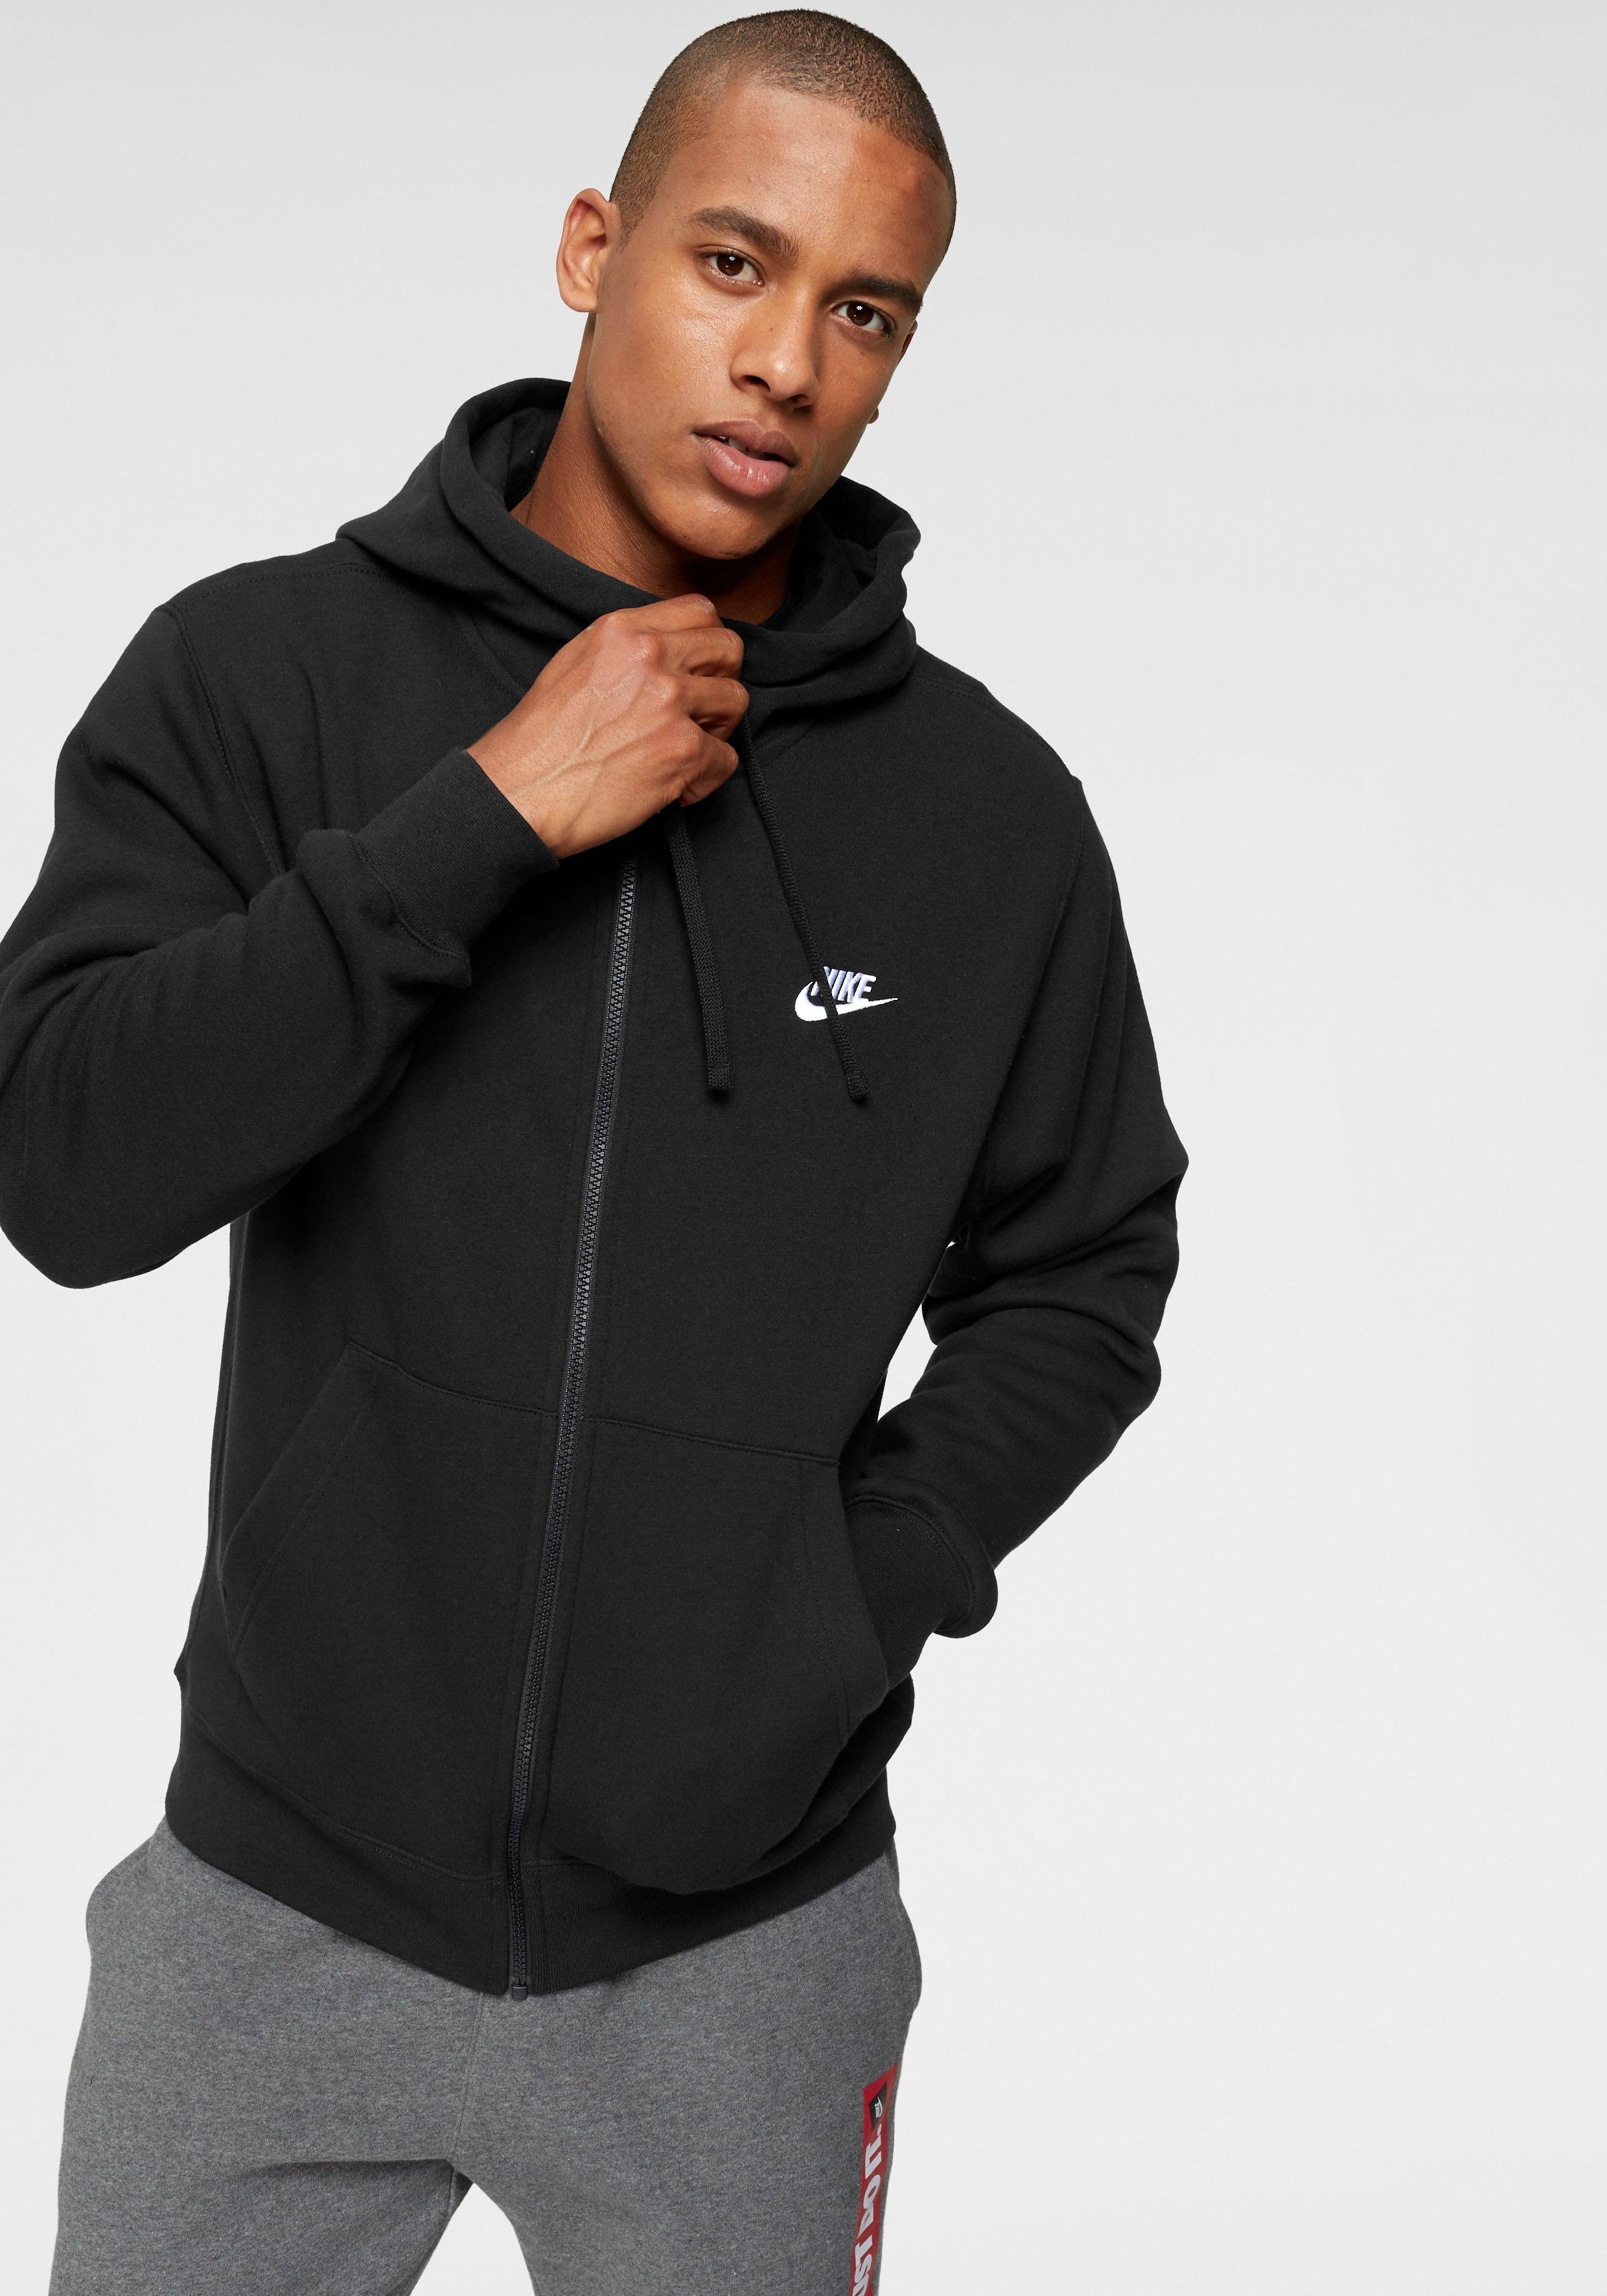 Nike Sportswear Jacke Herren online kaufen | OTTO